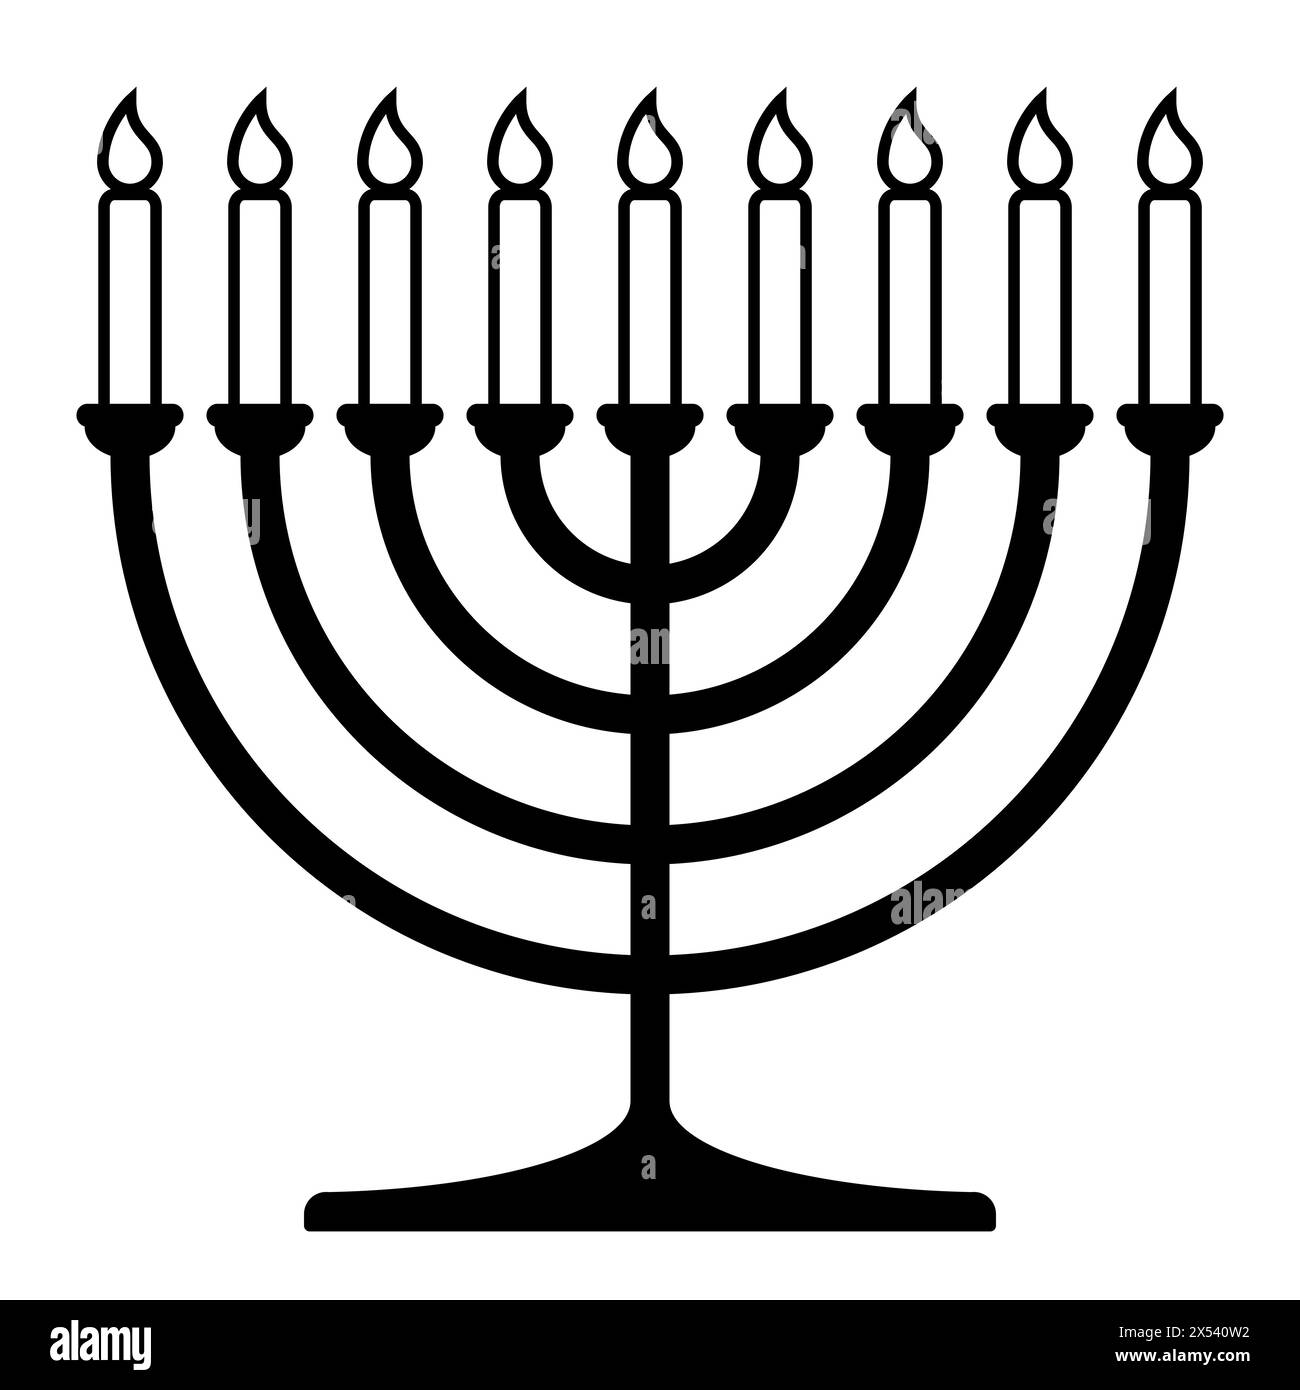 Hanukkah menorah, black and white vector silhouette illustration of hanukkiah nine-branched candelabrum with candles Stock Vector